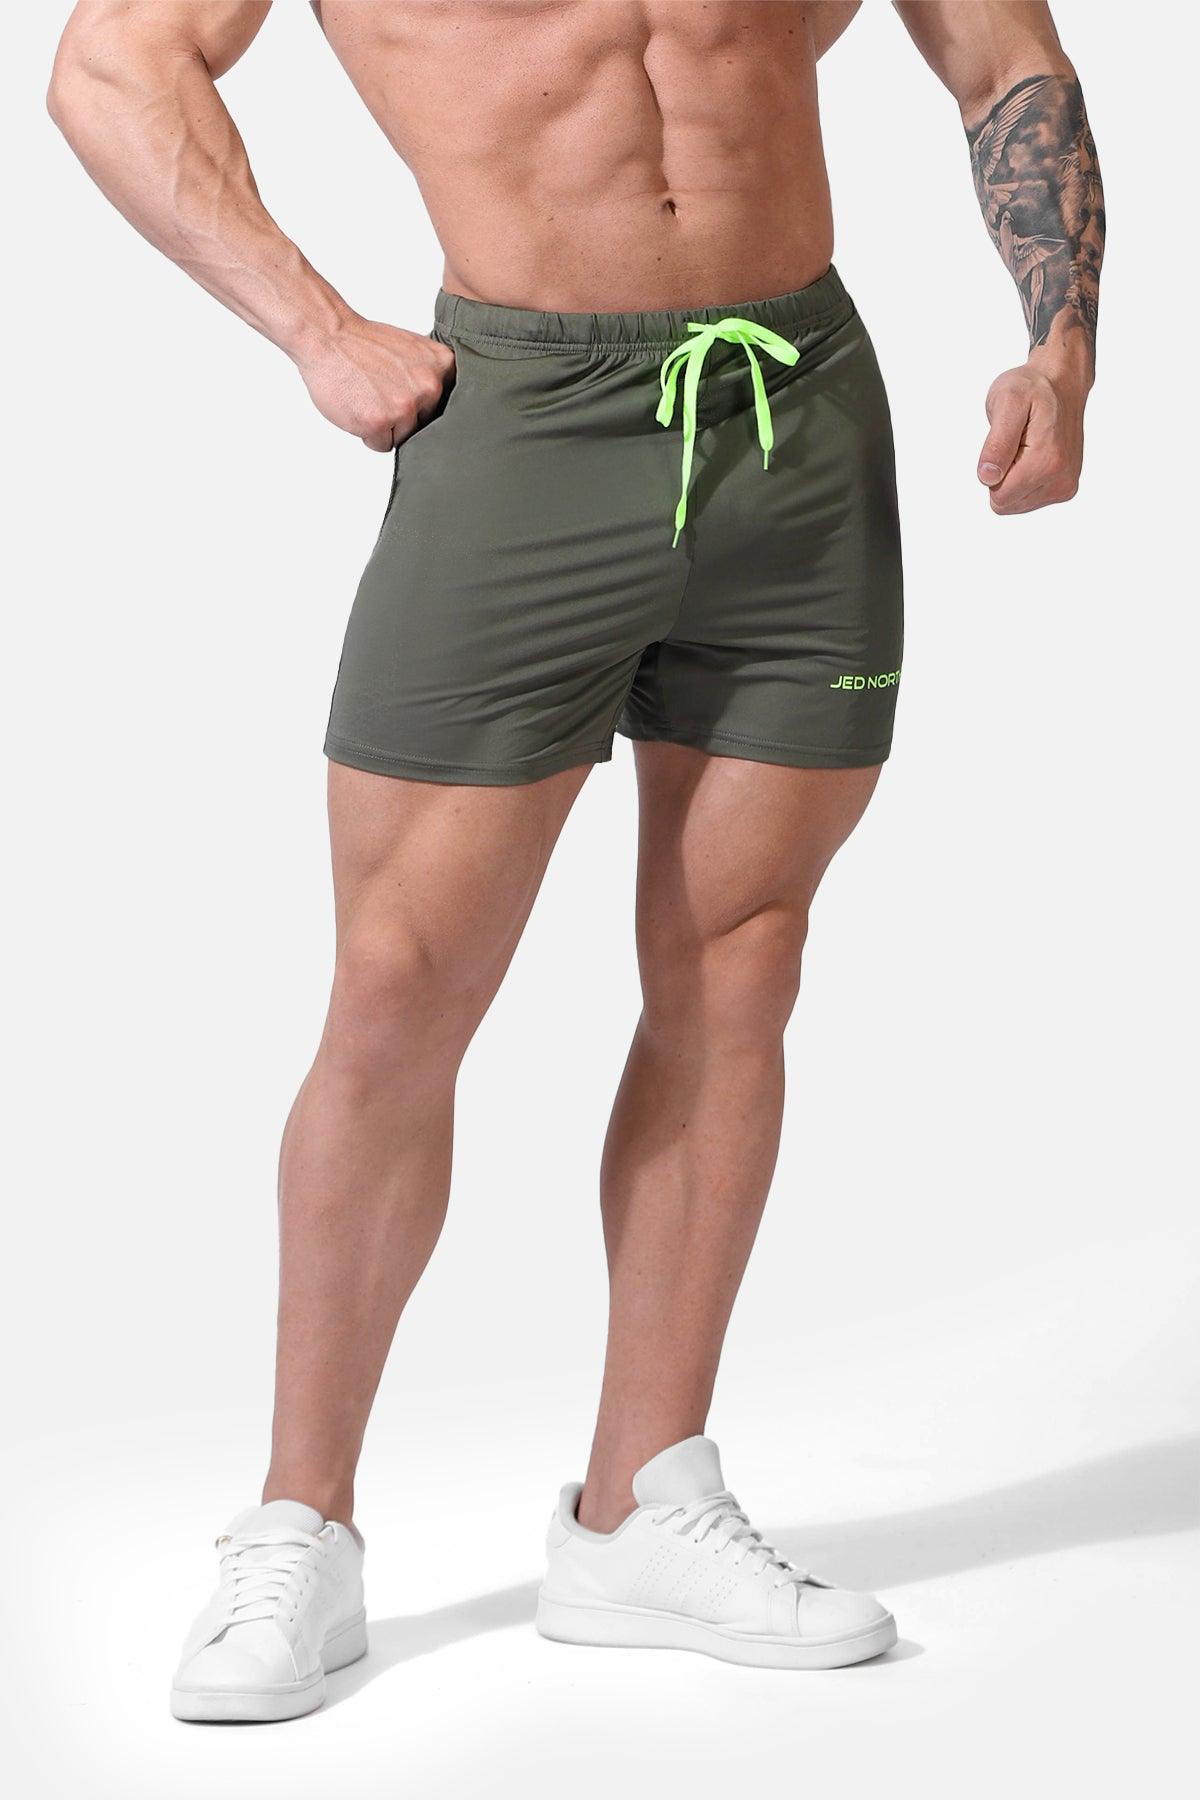 Agile Bodybuilding 4'' Shorts w Zipper Pockets - Olive